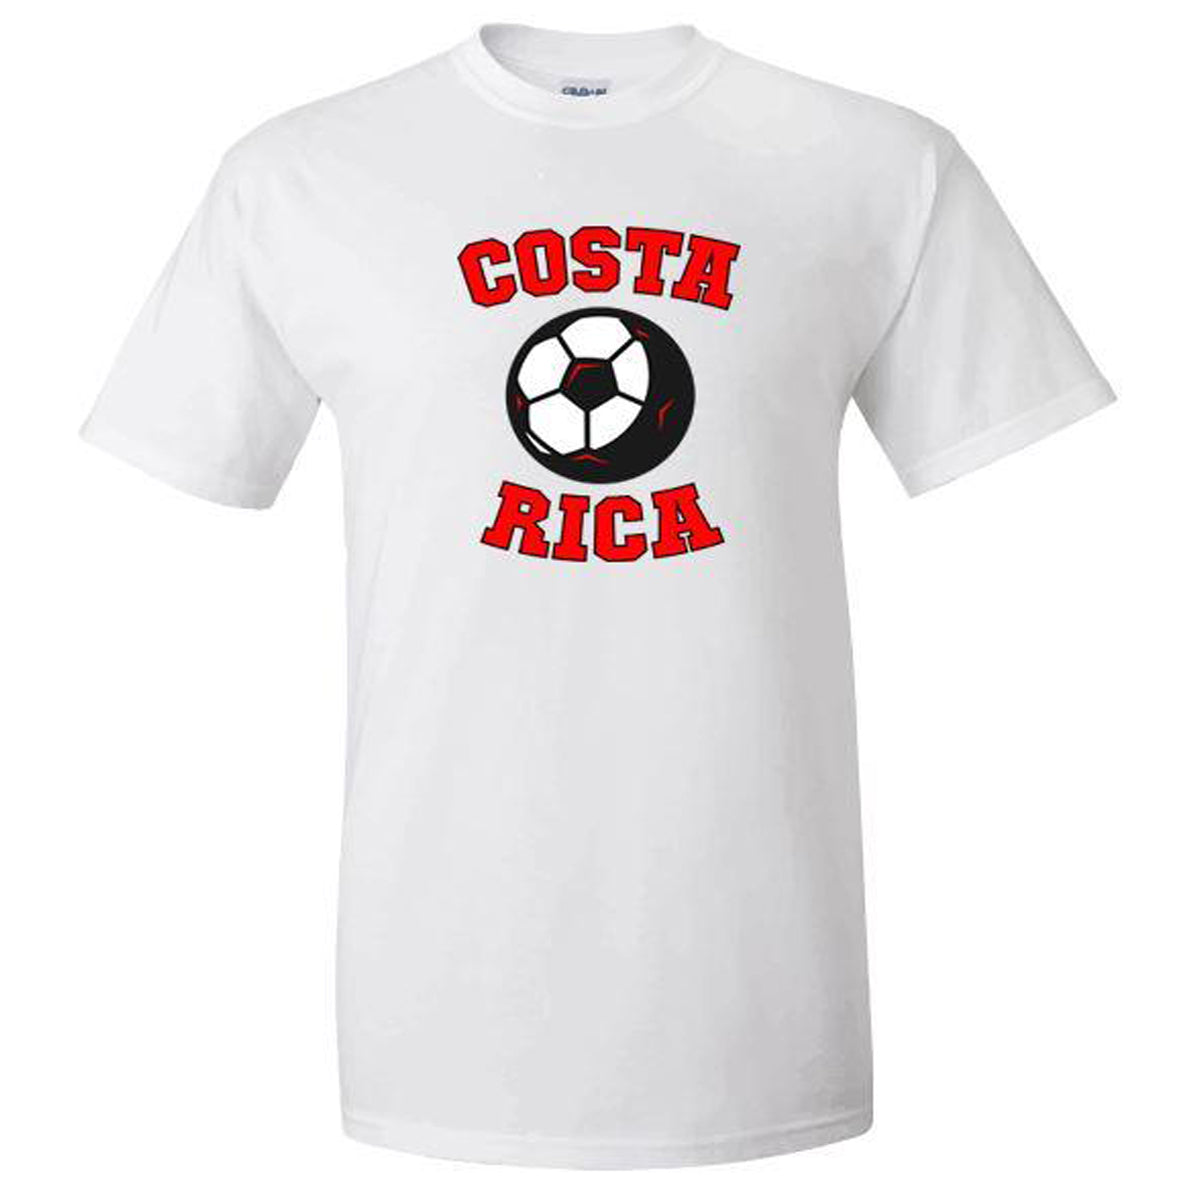 costa rica soccer t shirt